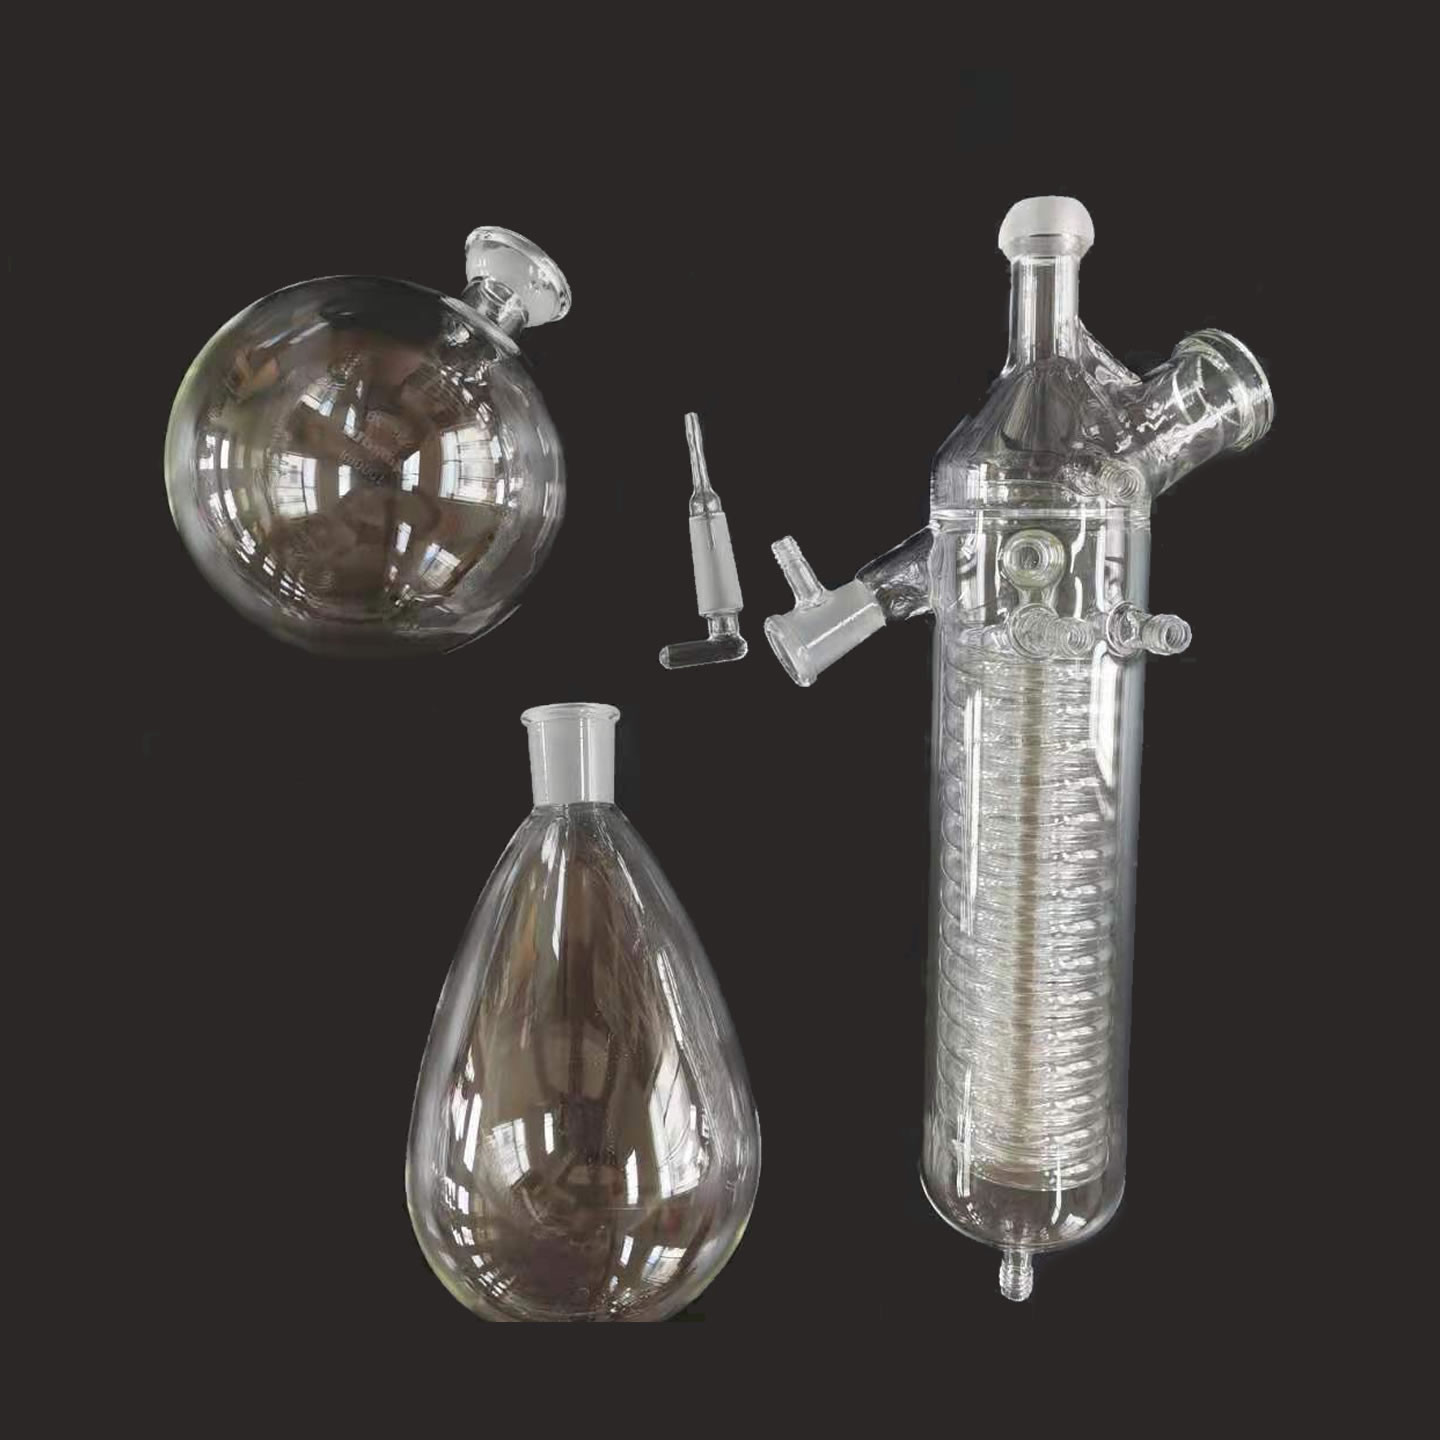 Buchi Rotary Evaporator Glass Condenser Glassware Sets